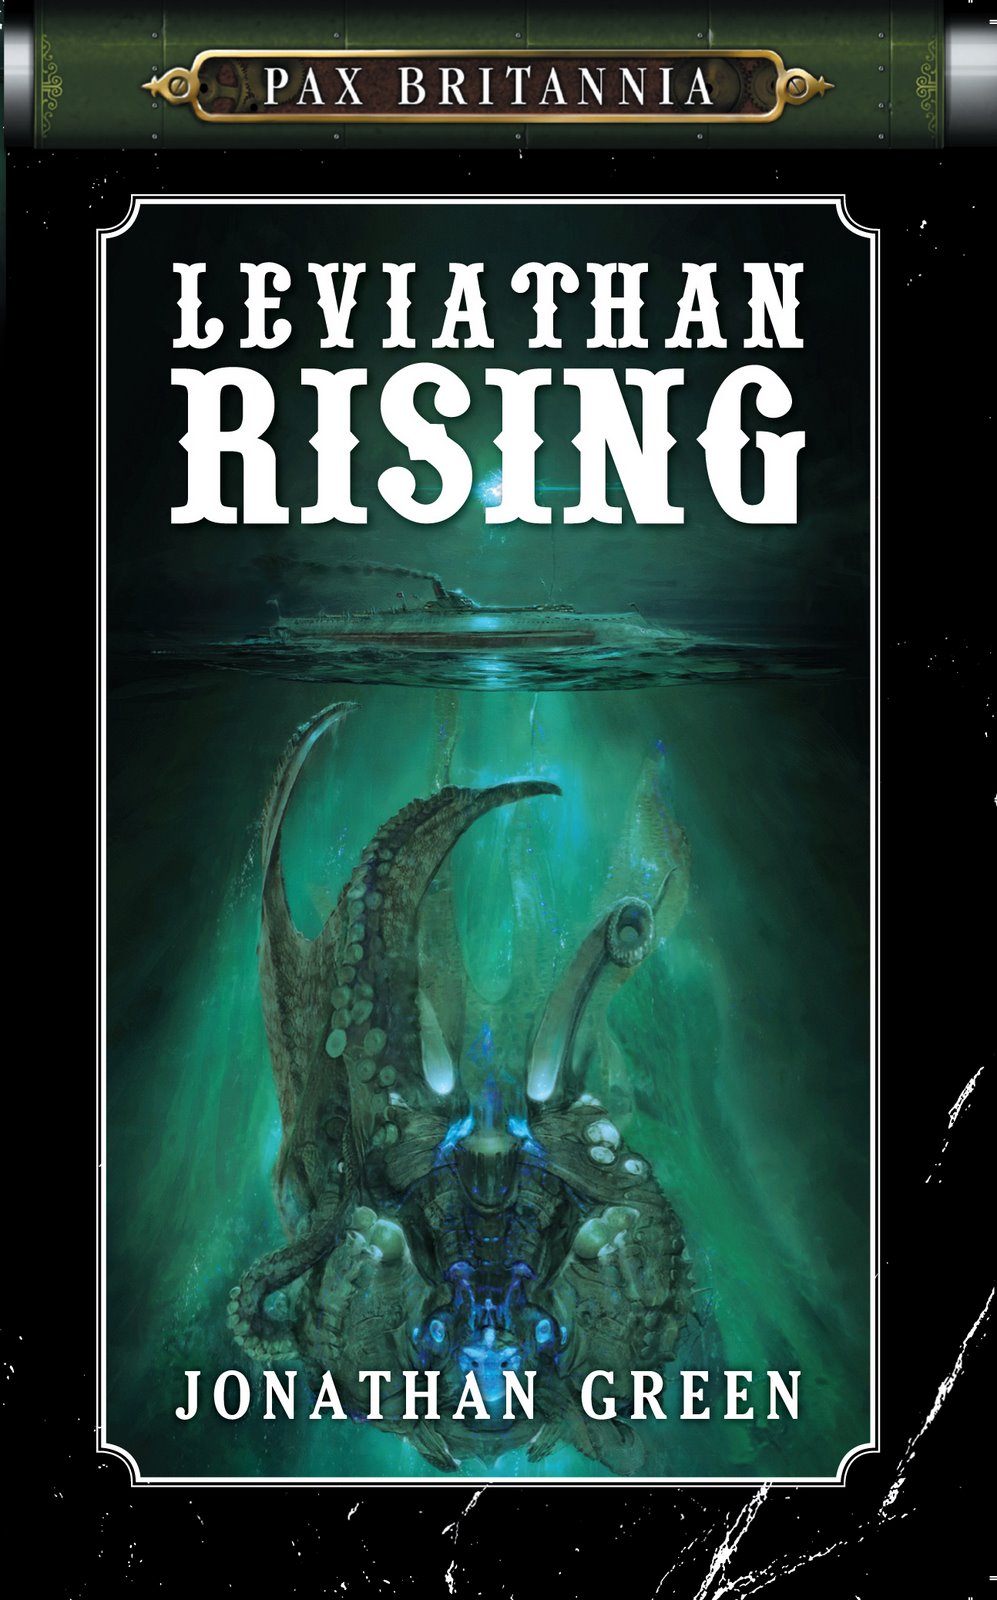 [Leviathan+alternative+cover.jpg]